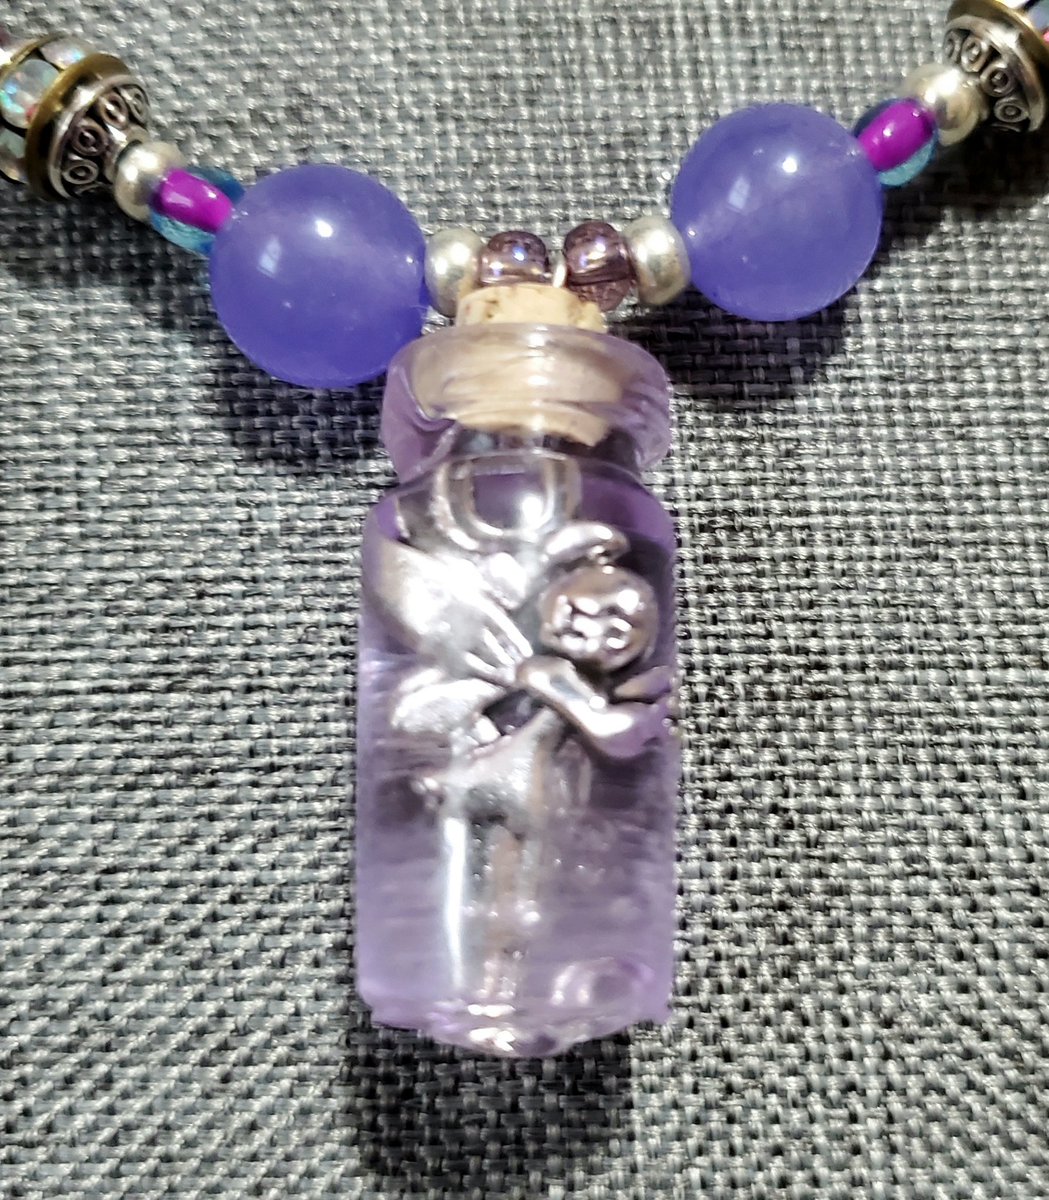 I made a Fairy in a Bottle necklace 

#fairy #fairies #faerie #fae #faeries #faelore #fairfolk #fairyinabottle #magic #fantasy #fantasyart #dnd #dungeonsanddragons #art #crafting #jewelry #jewelrymaking #jewelrycrafting #necklace #necklaces